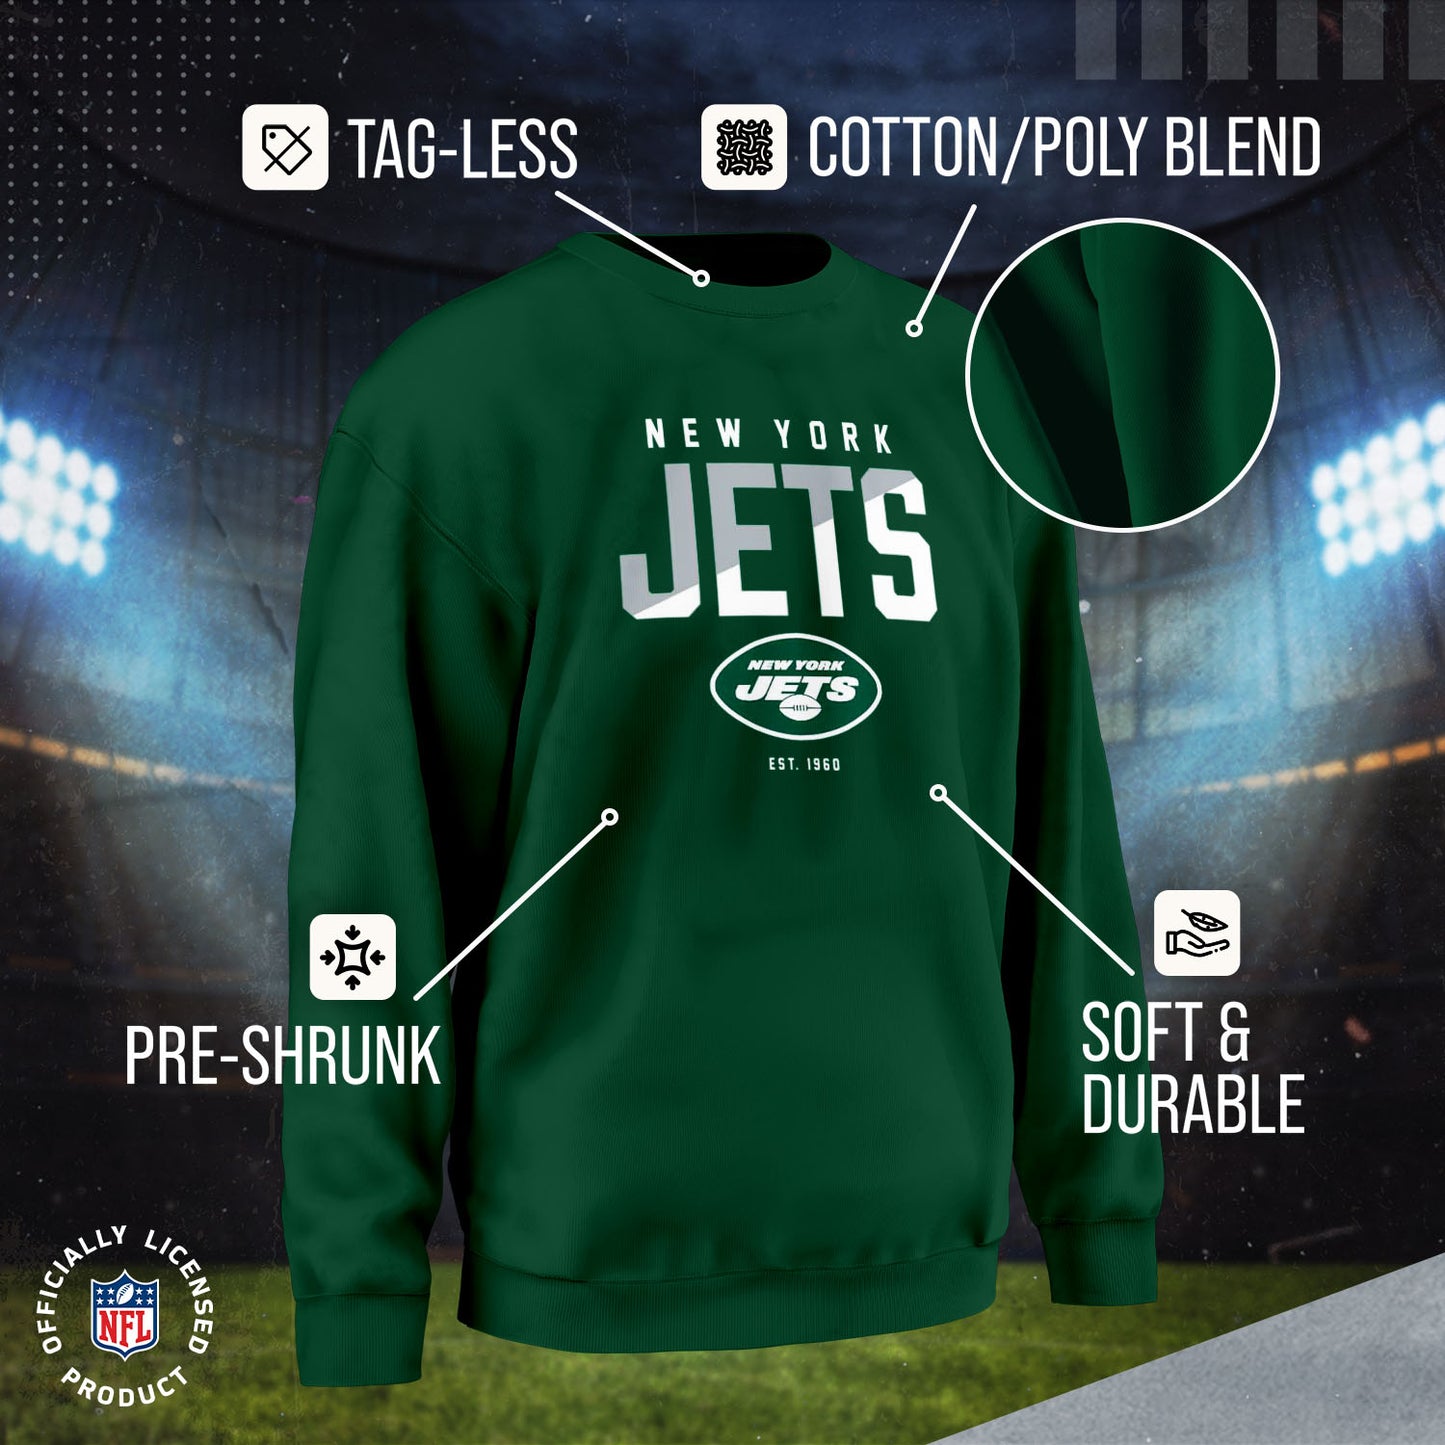 New York Jets Adult NFL Diagonal Fade Color Block Crewneck Sweatshirt - Forest Green